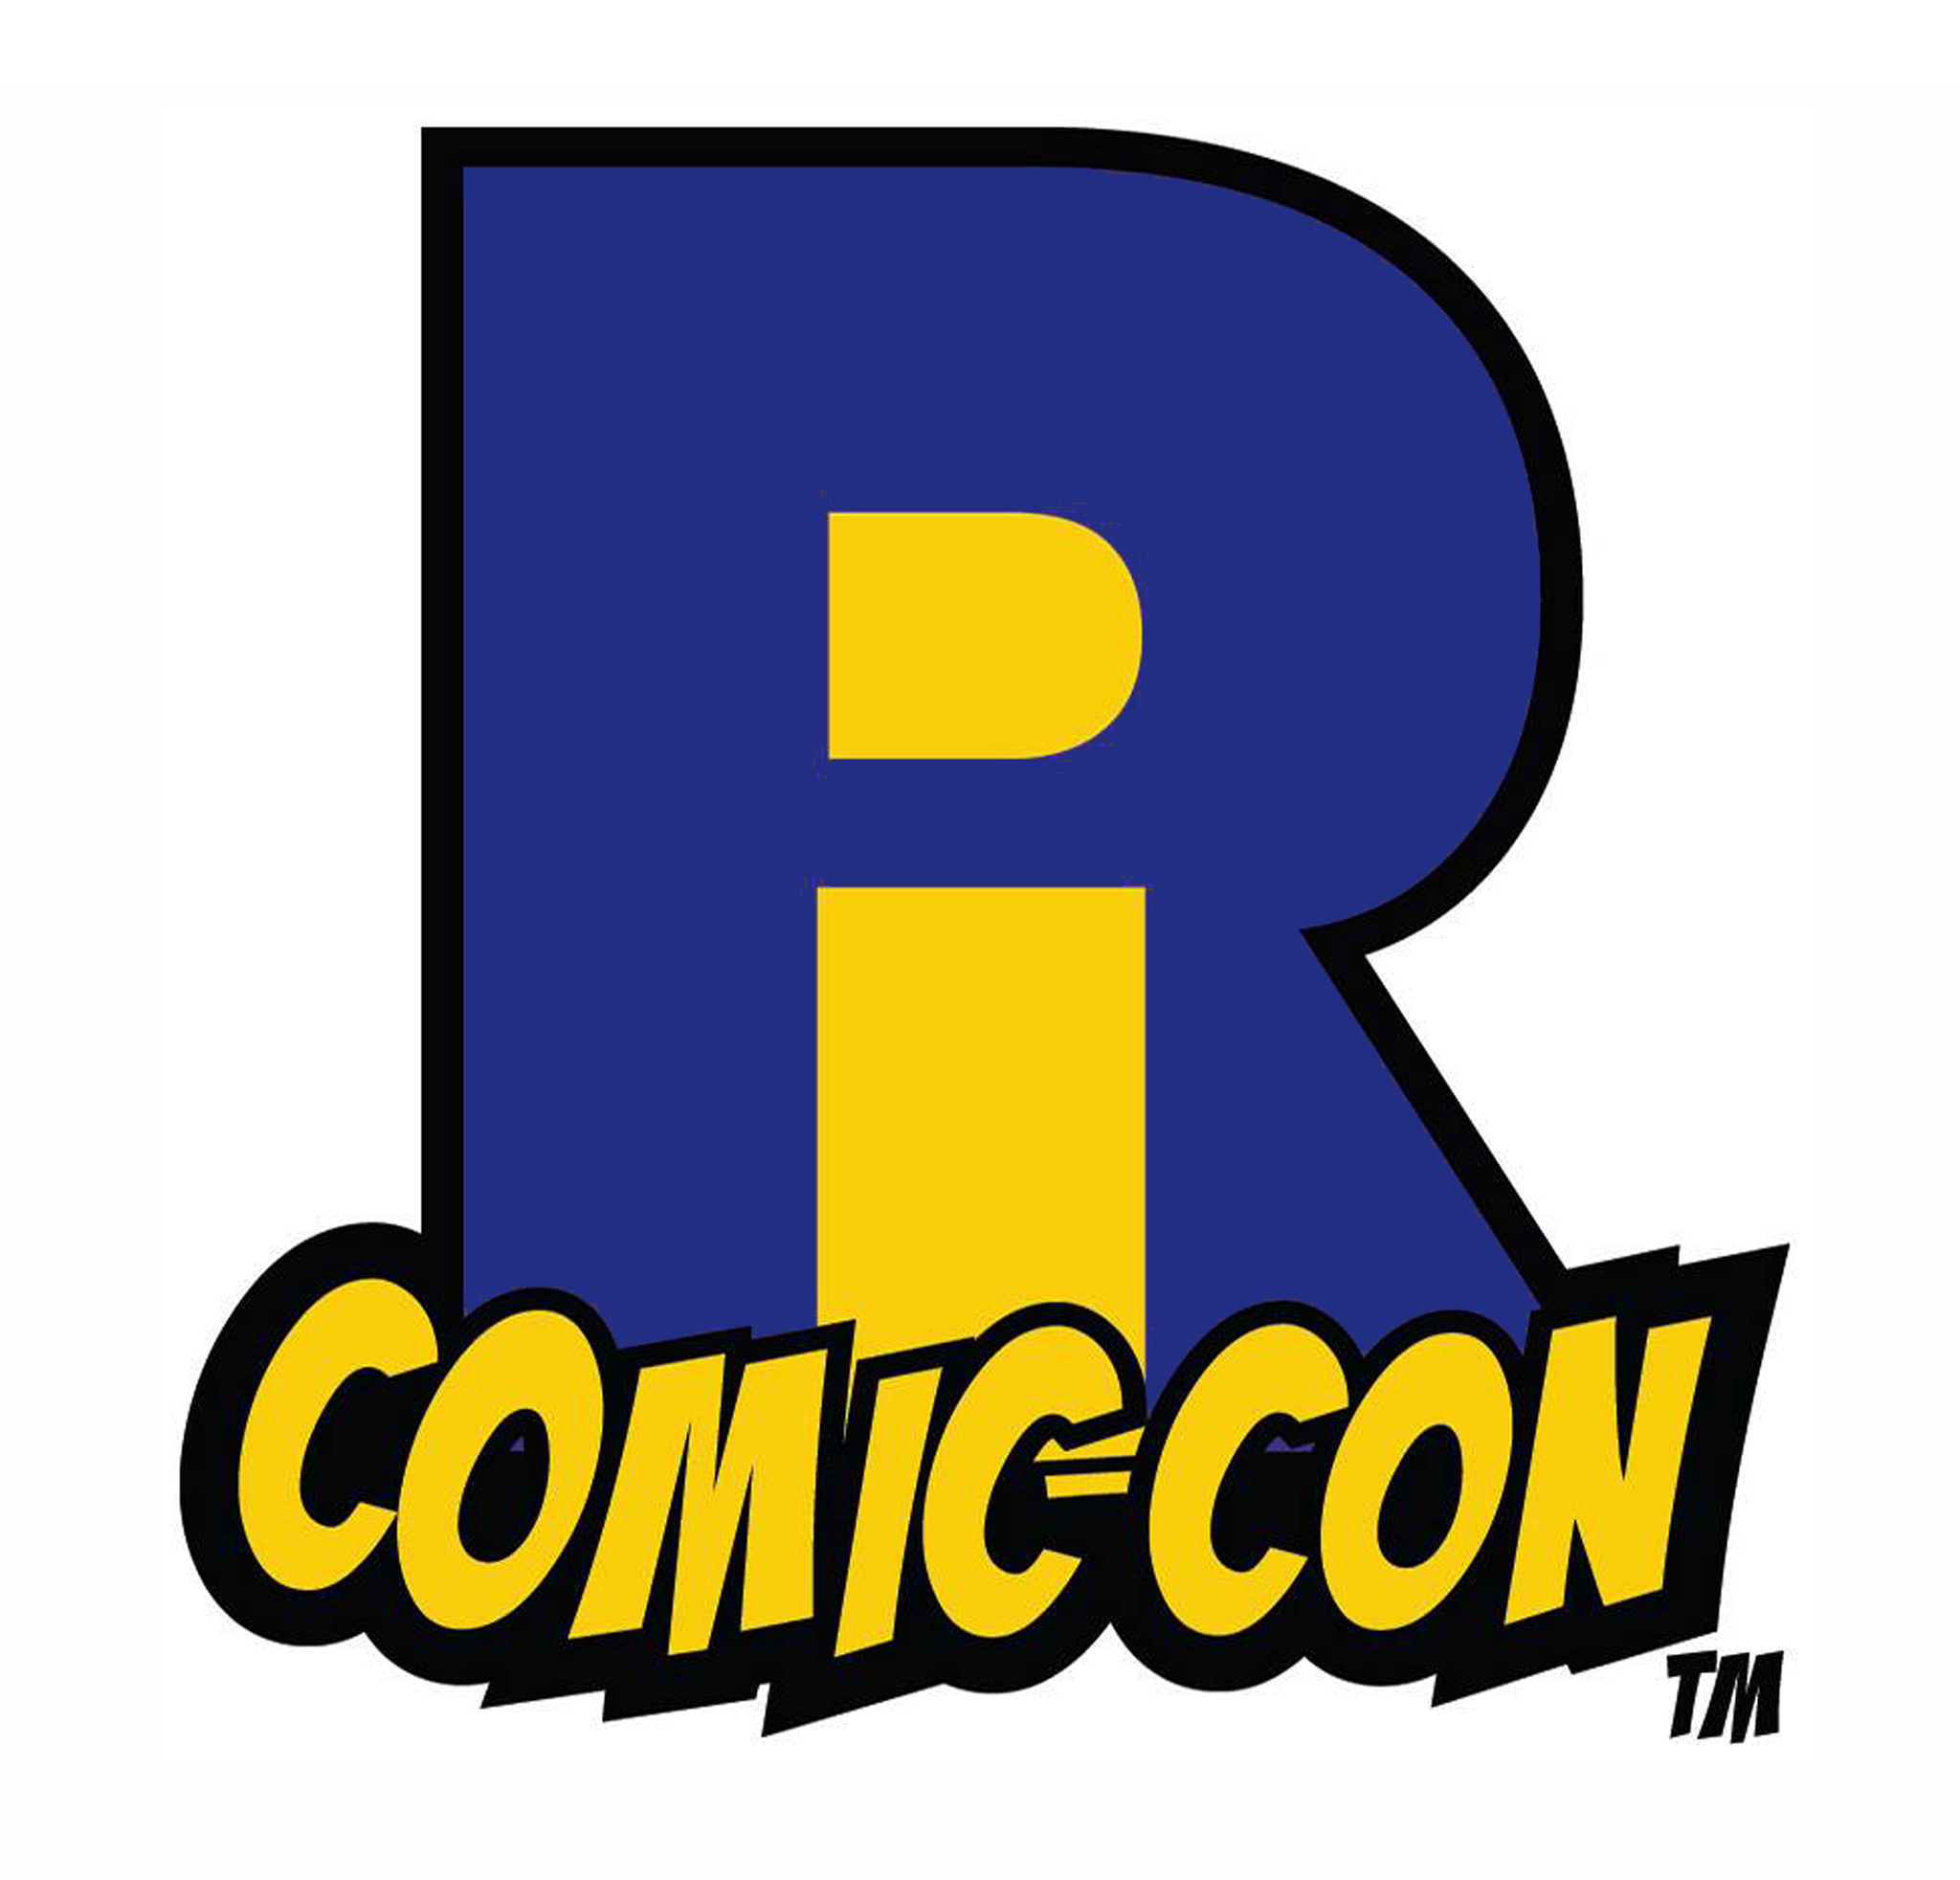 RICC logo Rhode Island